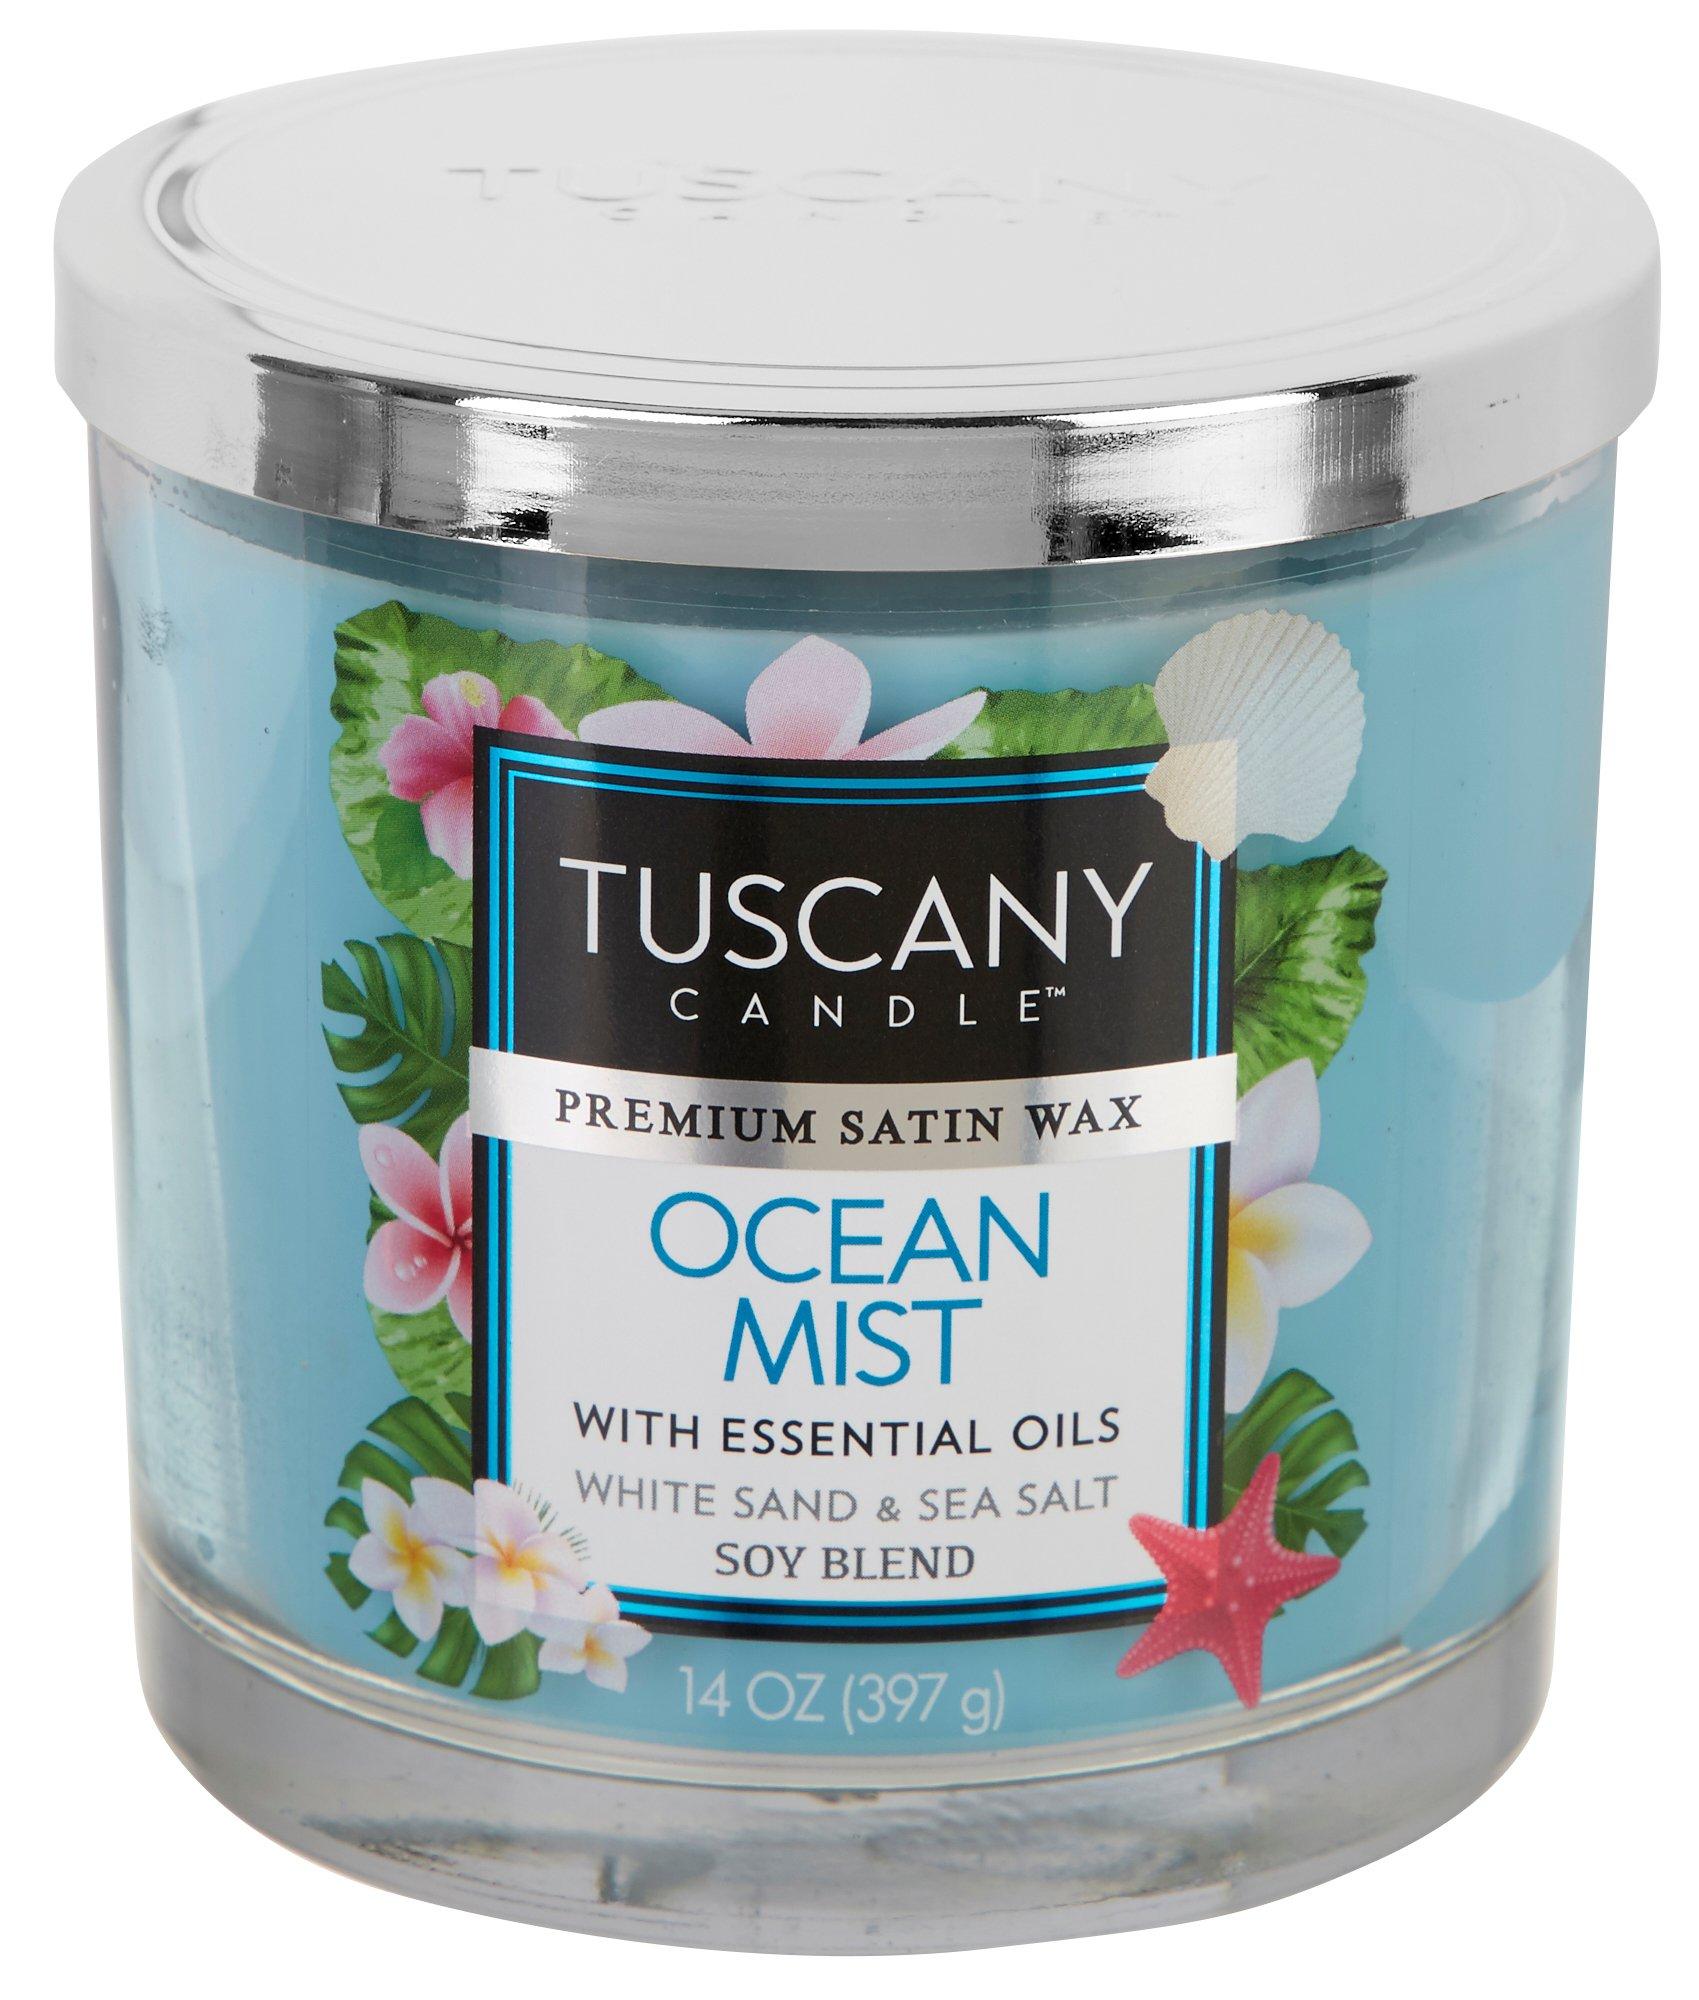 Tuscany 14 oz. Ocean Mist Soy Blend Jar Candle